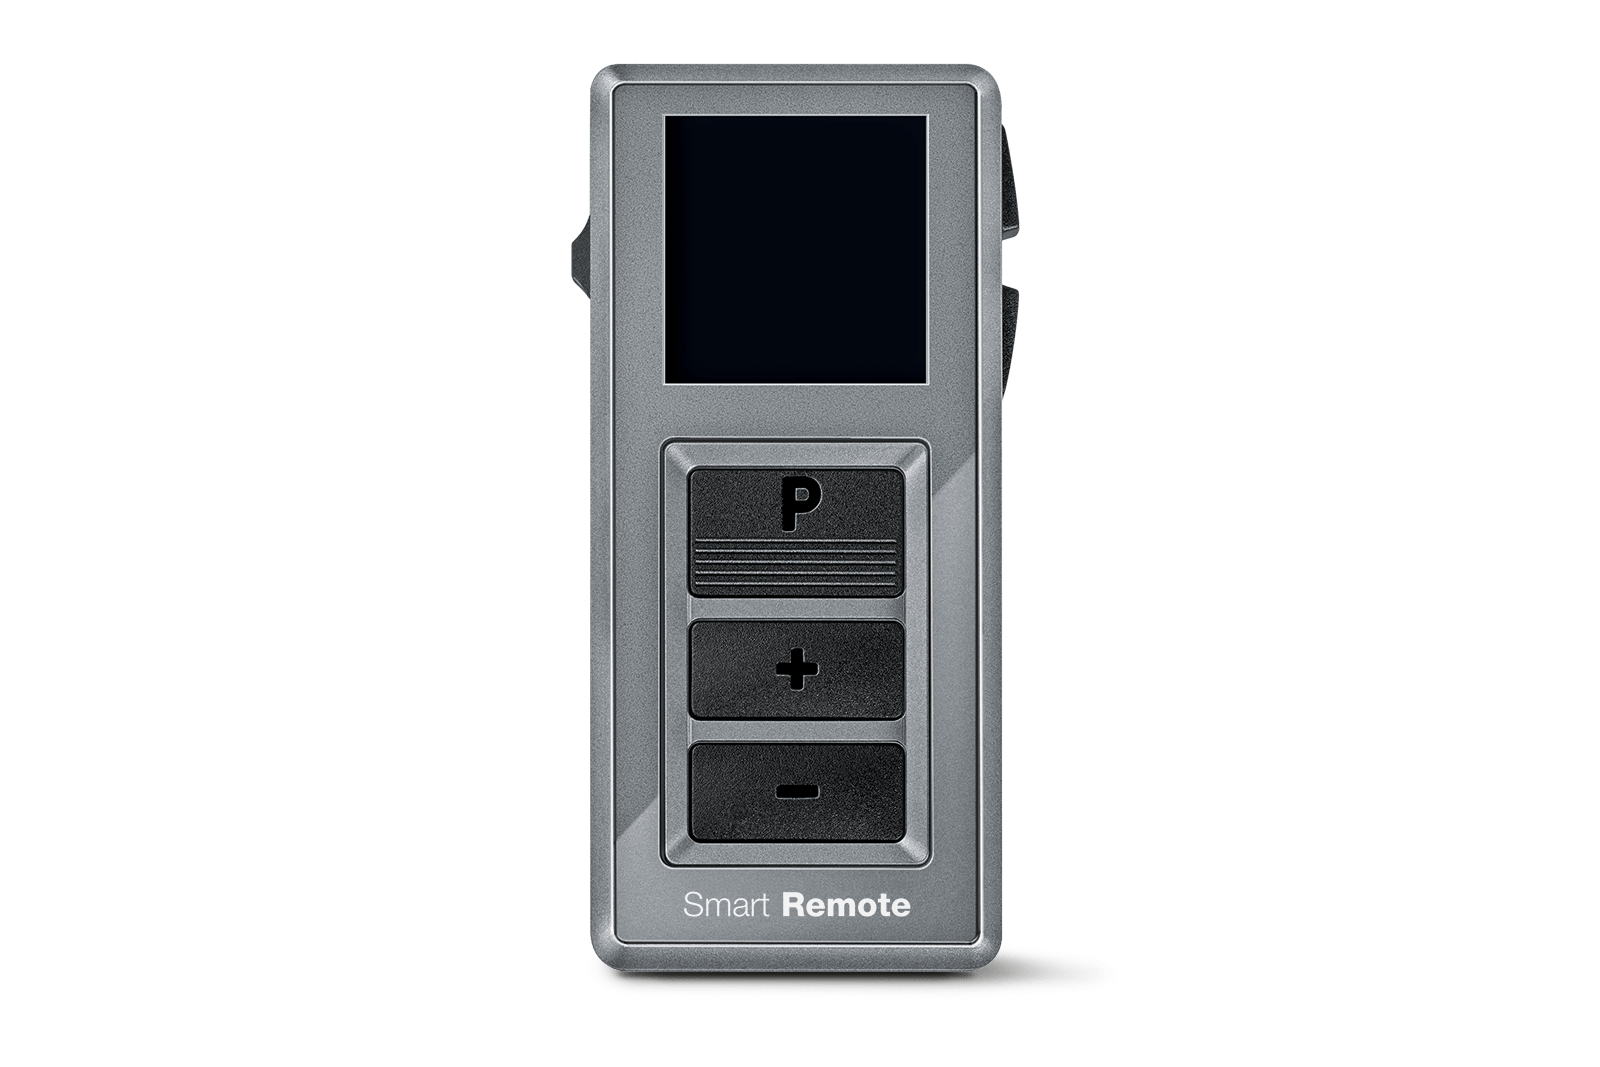 Rexton Smart Remote remote control for rexton hearing aids